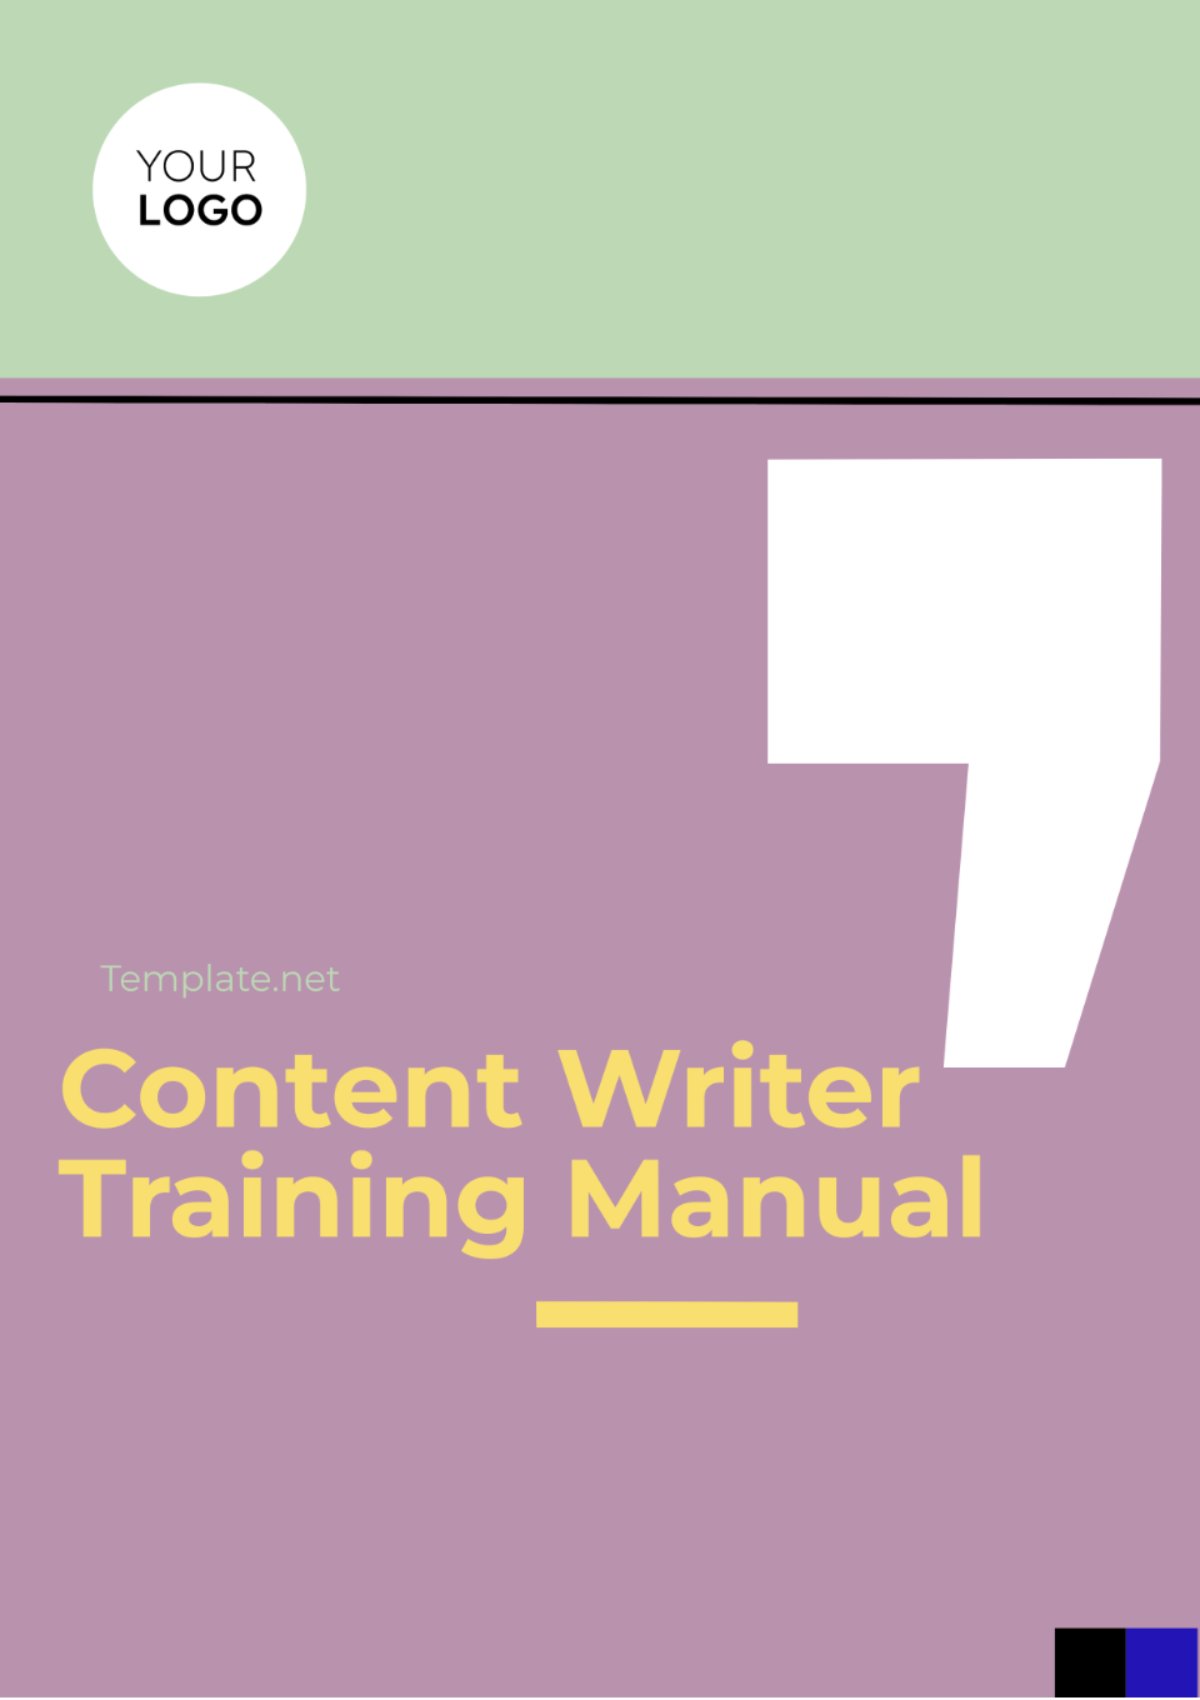 Content Writer Training Manual Templates